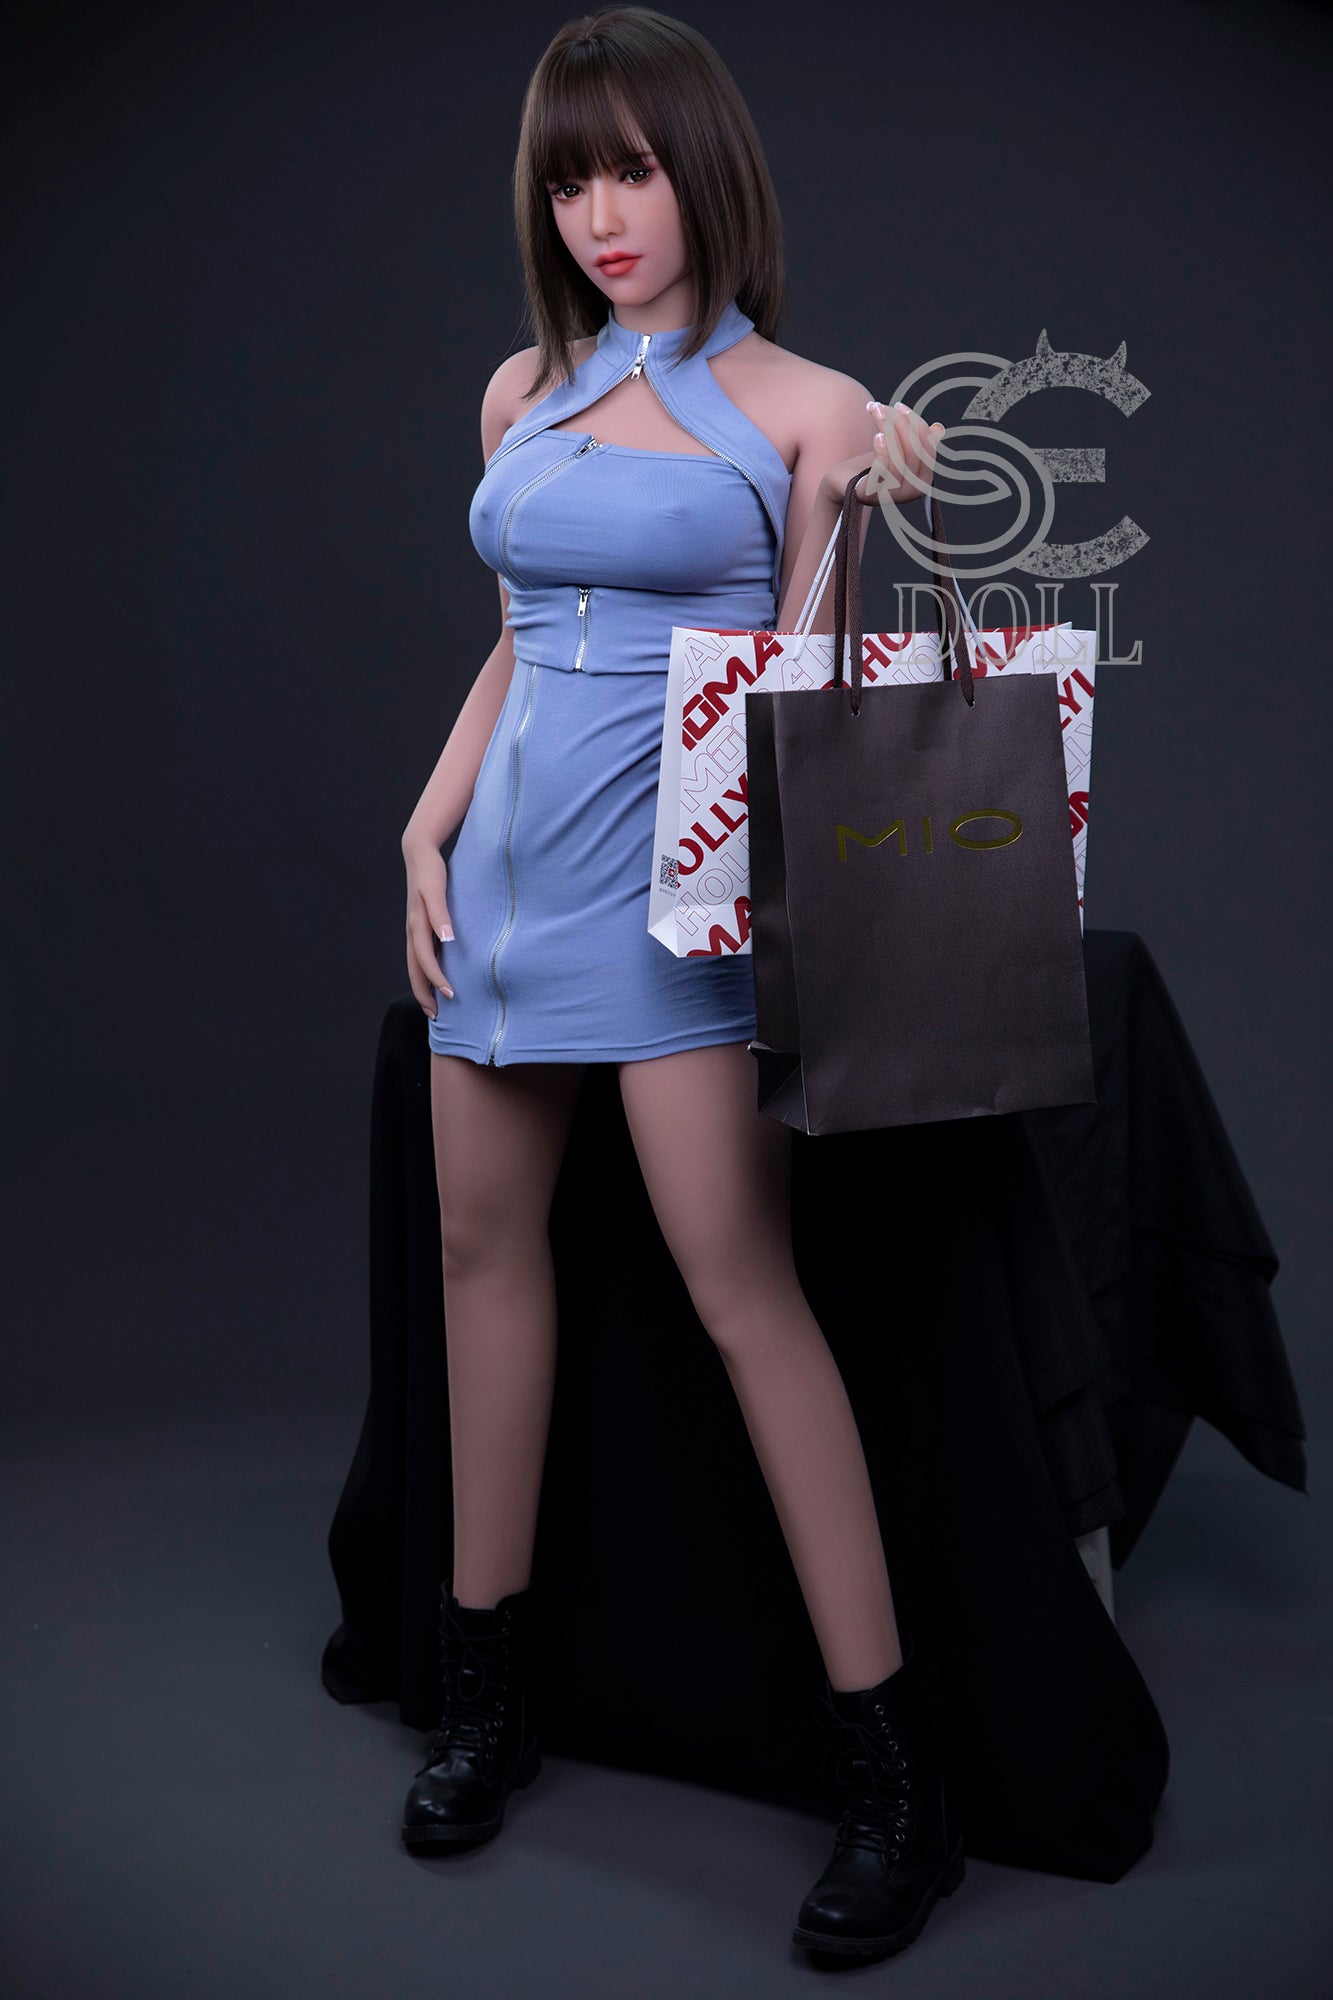 SEDOLL 163 cm E TPE - Mayu | Buy Sex Dolls at DOLLS ACTUALLY